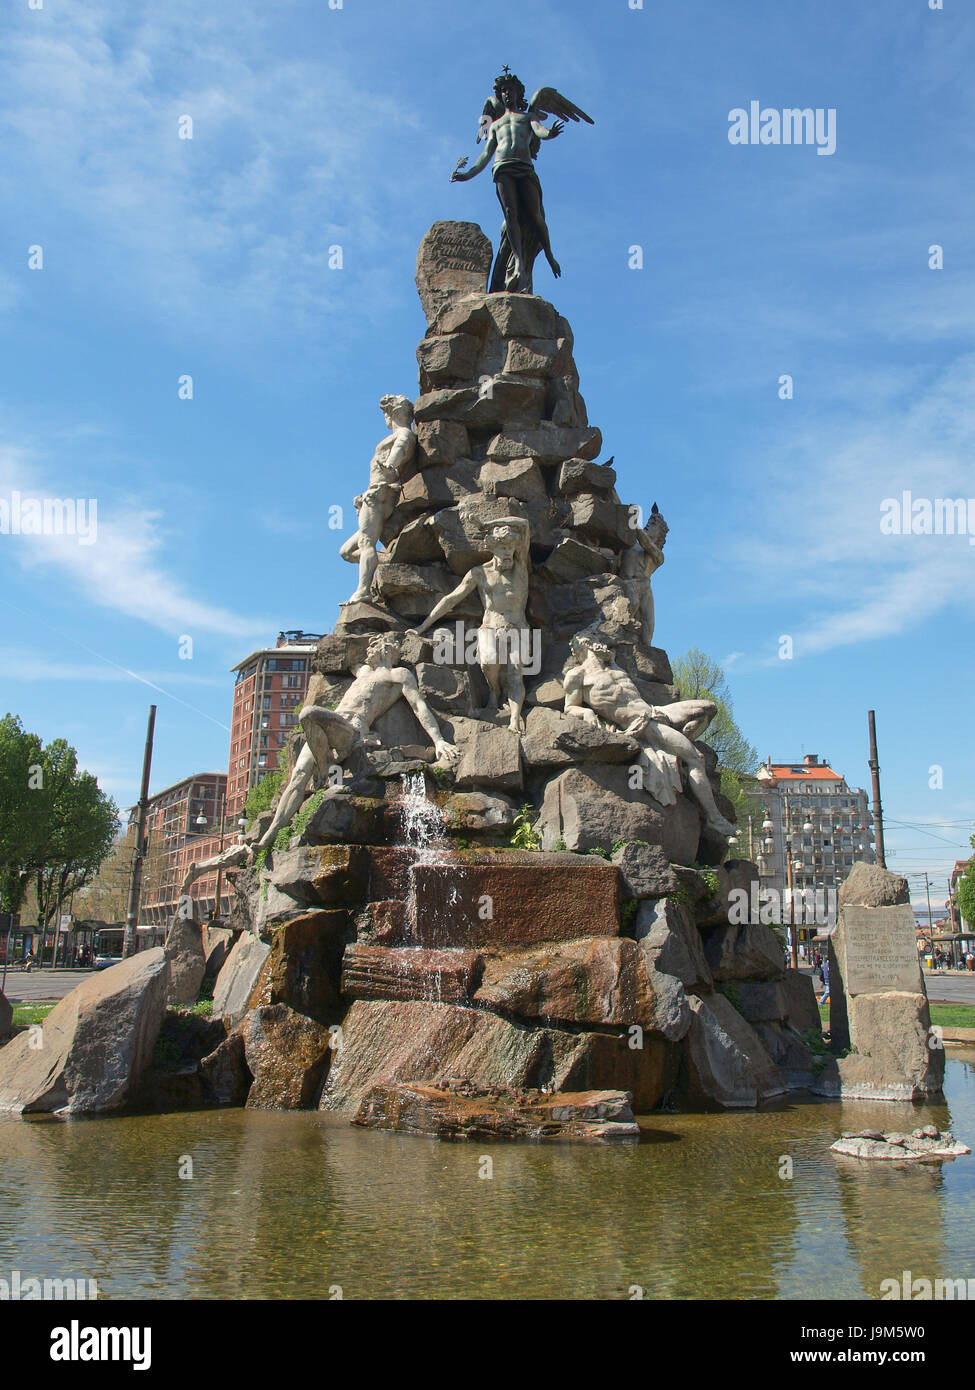 monument, europe, italian, italia, landmark, del, italy, city, town, monument, Stock Photo